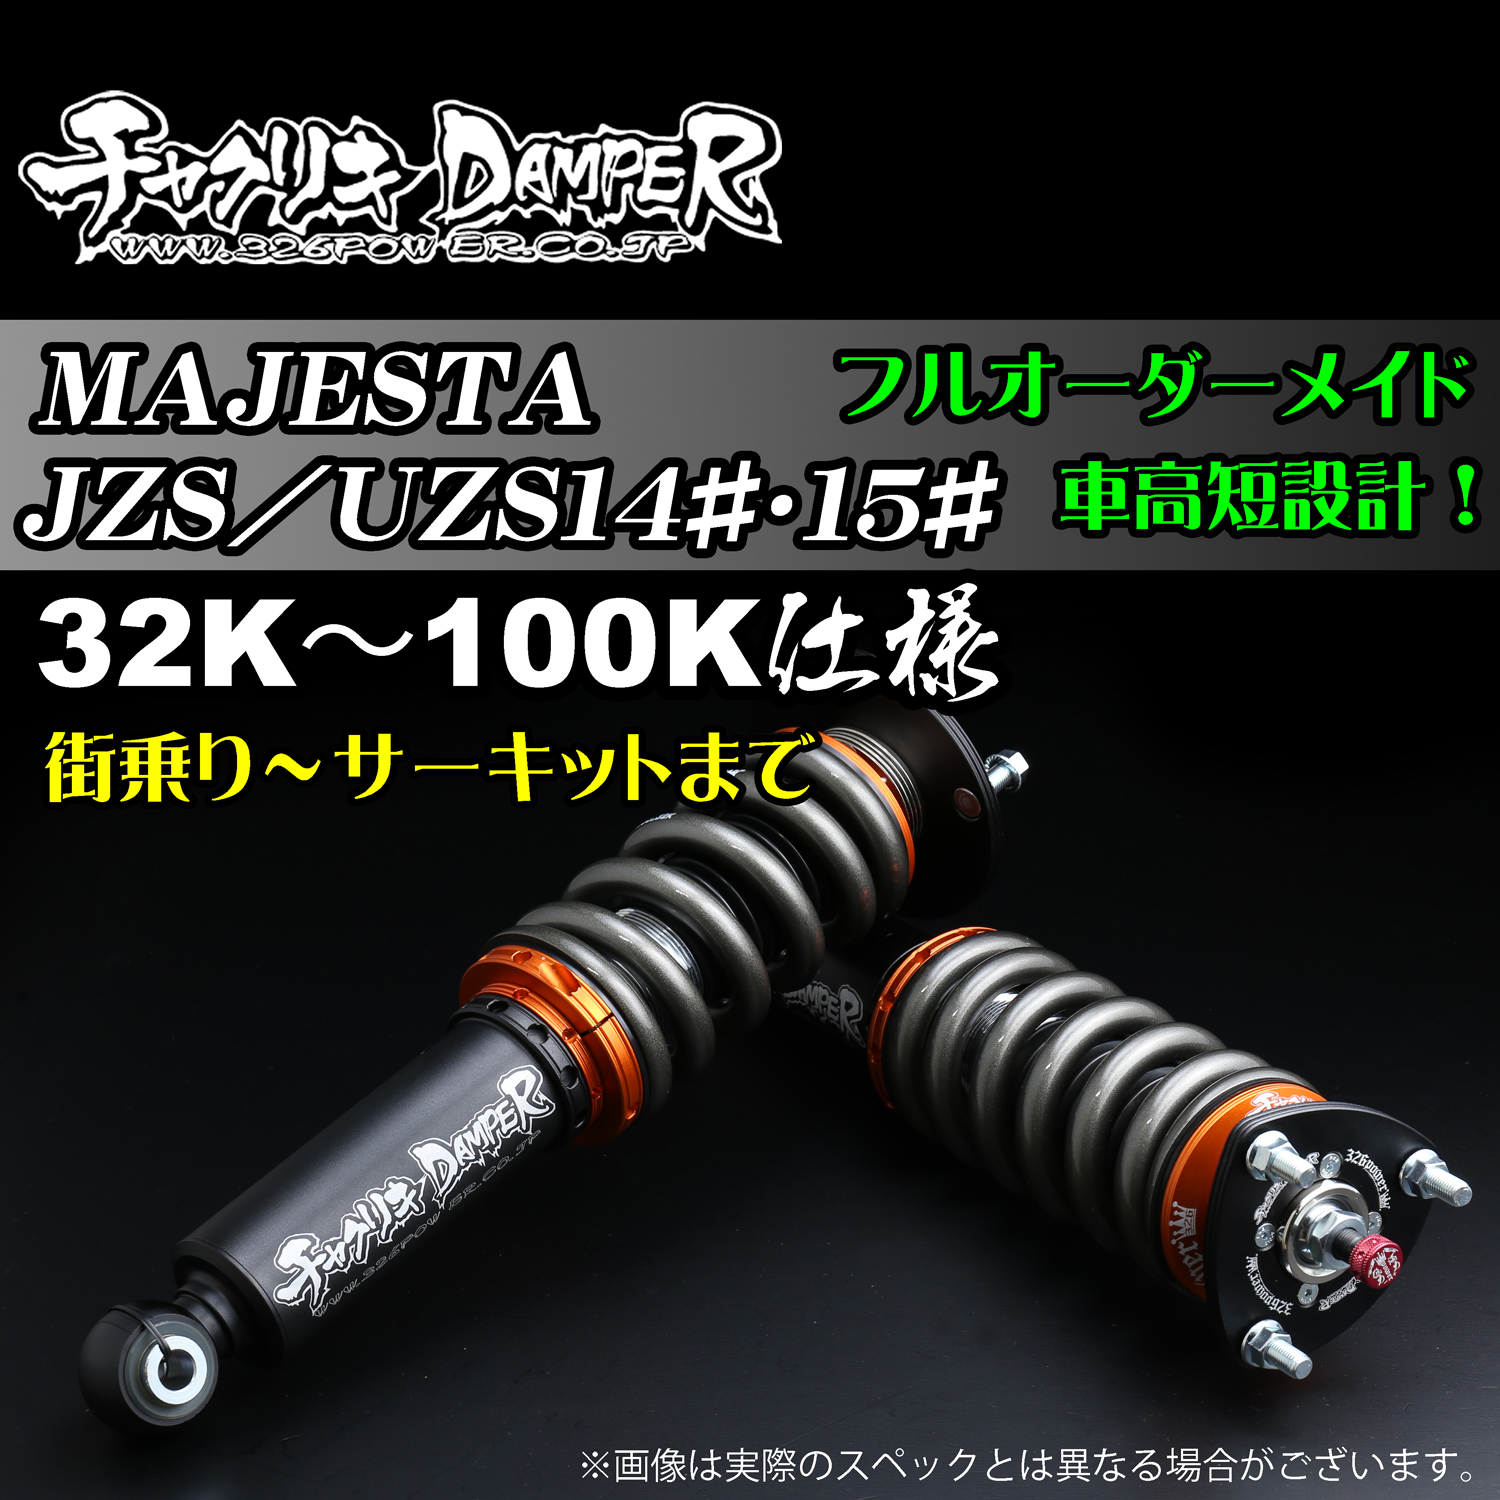 326 Power Chyakuriki Coilover - Majesta JZS/UZS14・15# - 32K-100K Spec